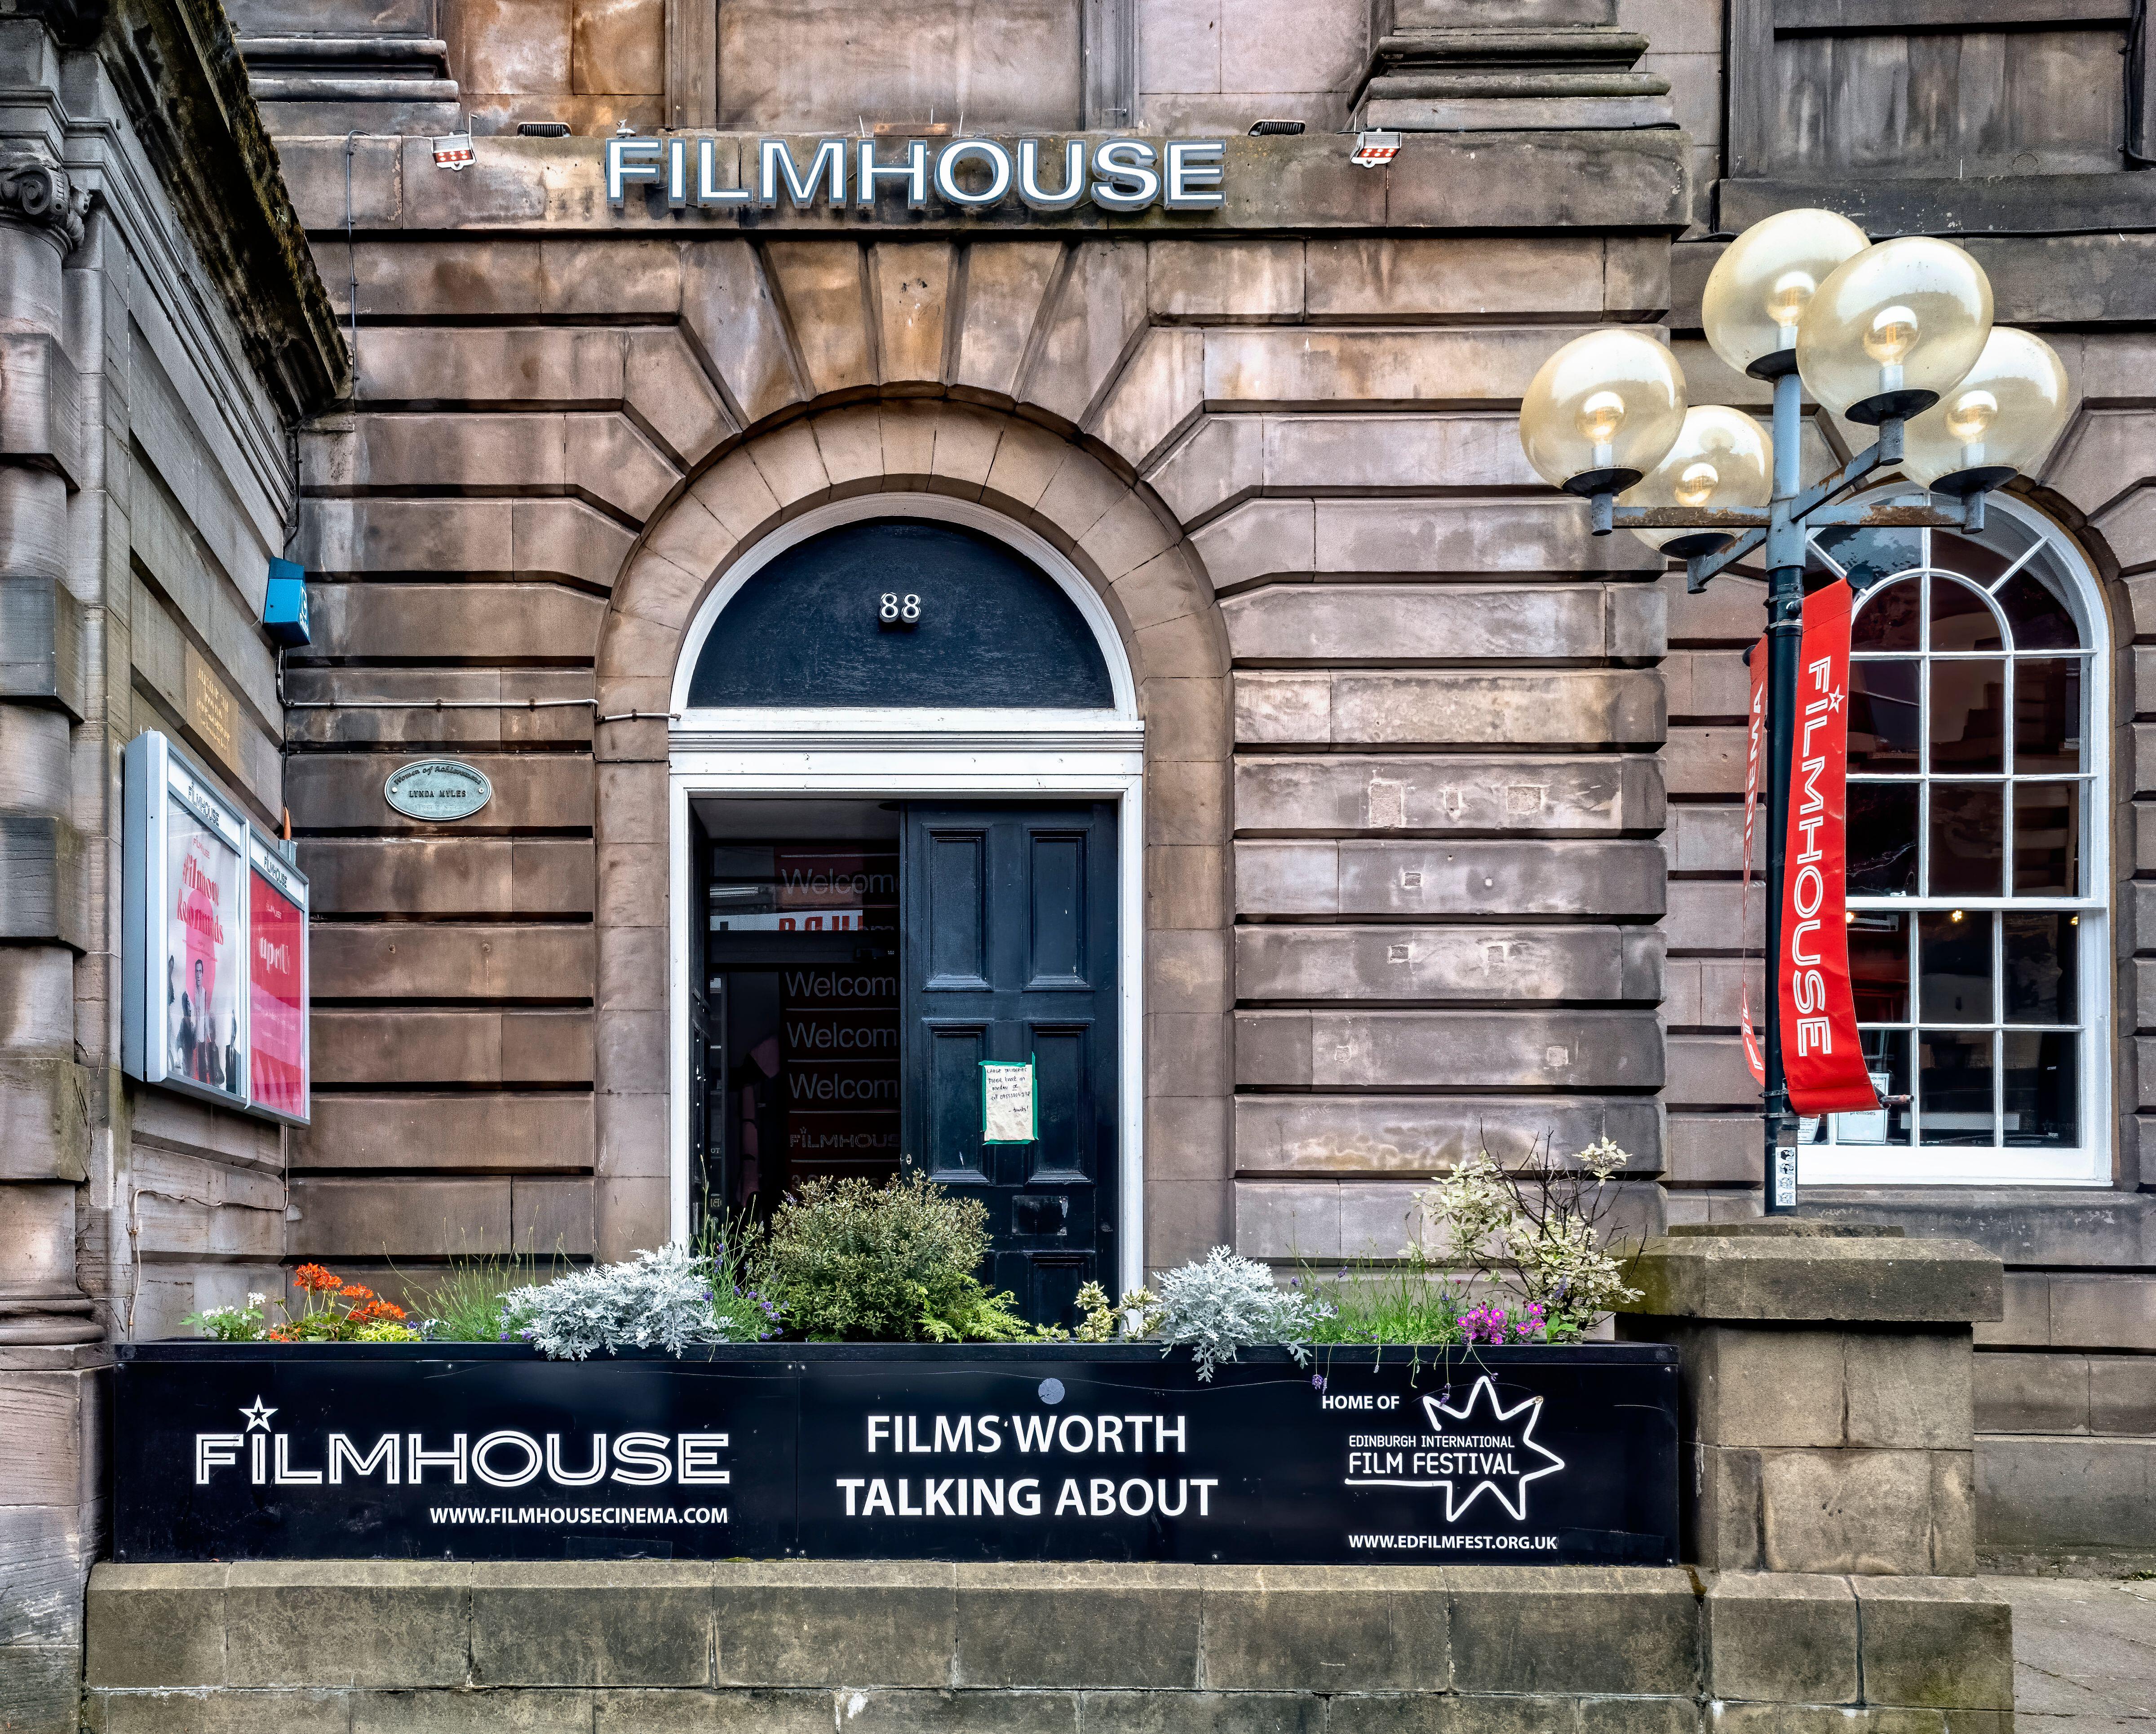 Filmhouse cinema